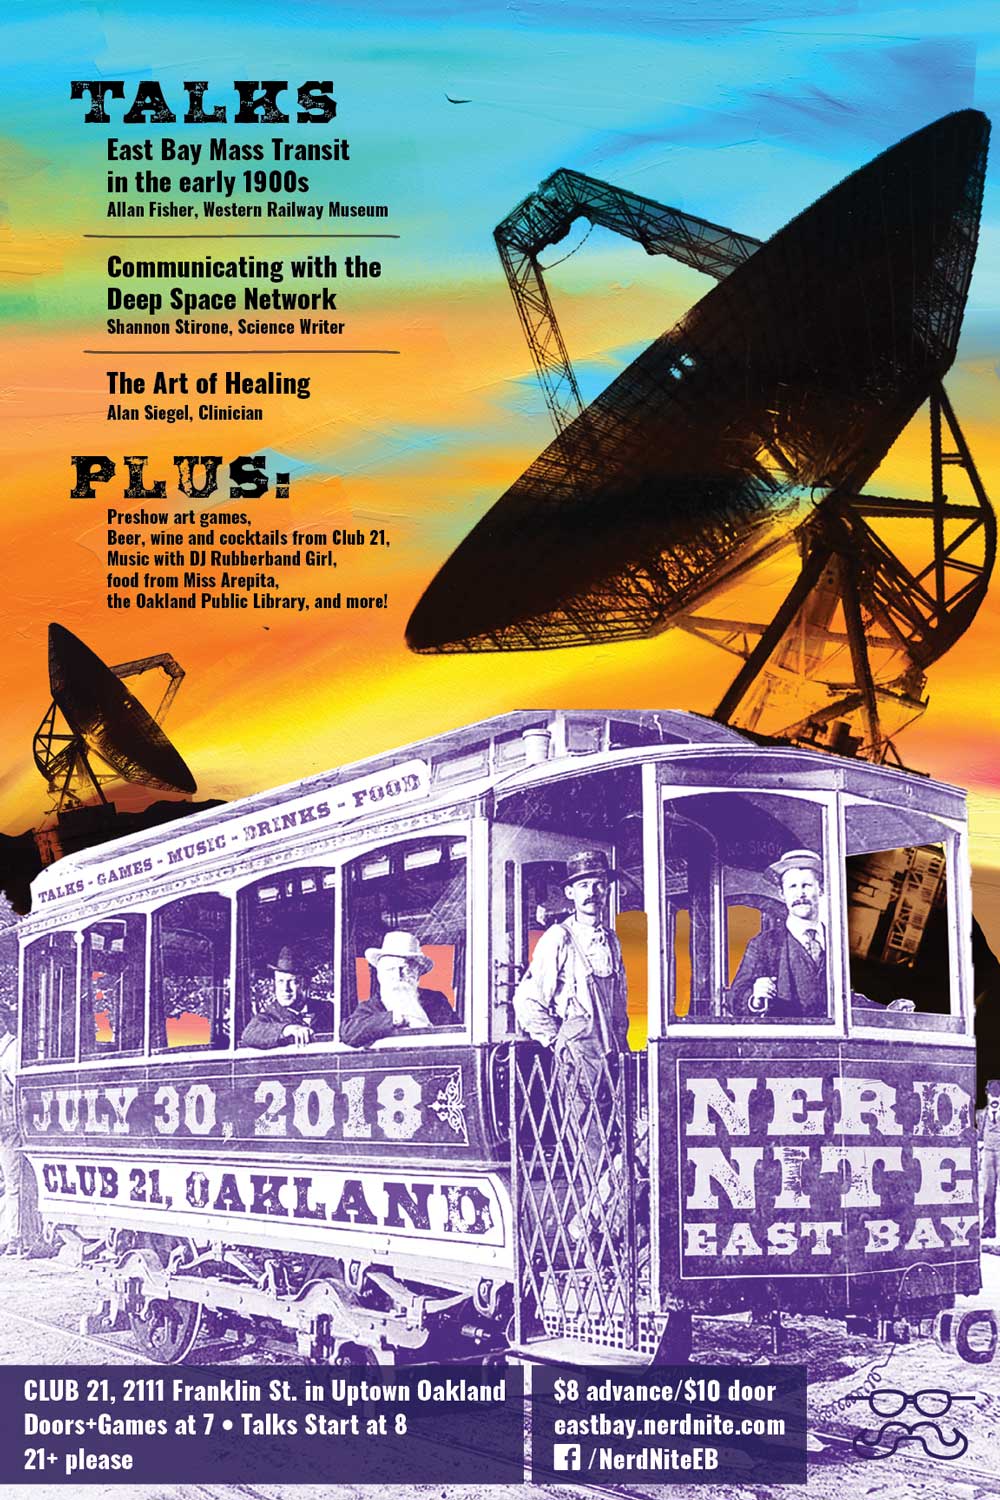 Nerd Nite East Bay Poster Transit and SETI